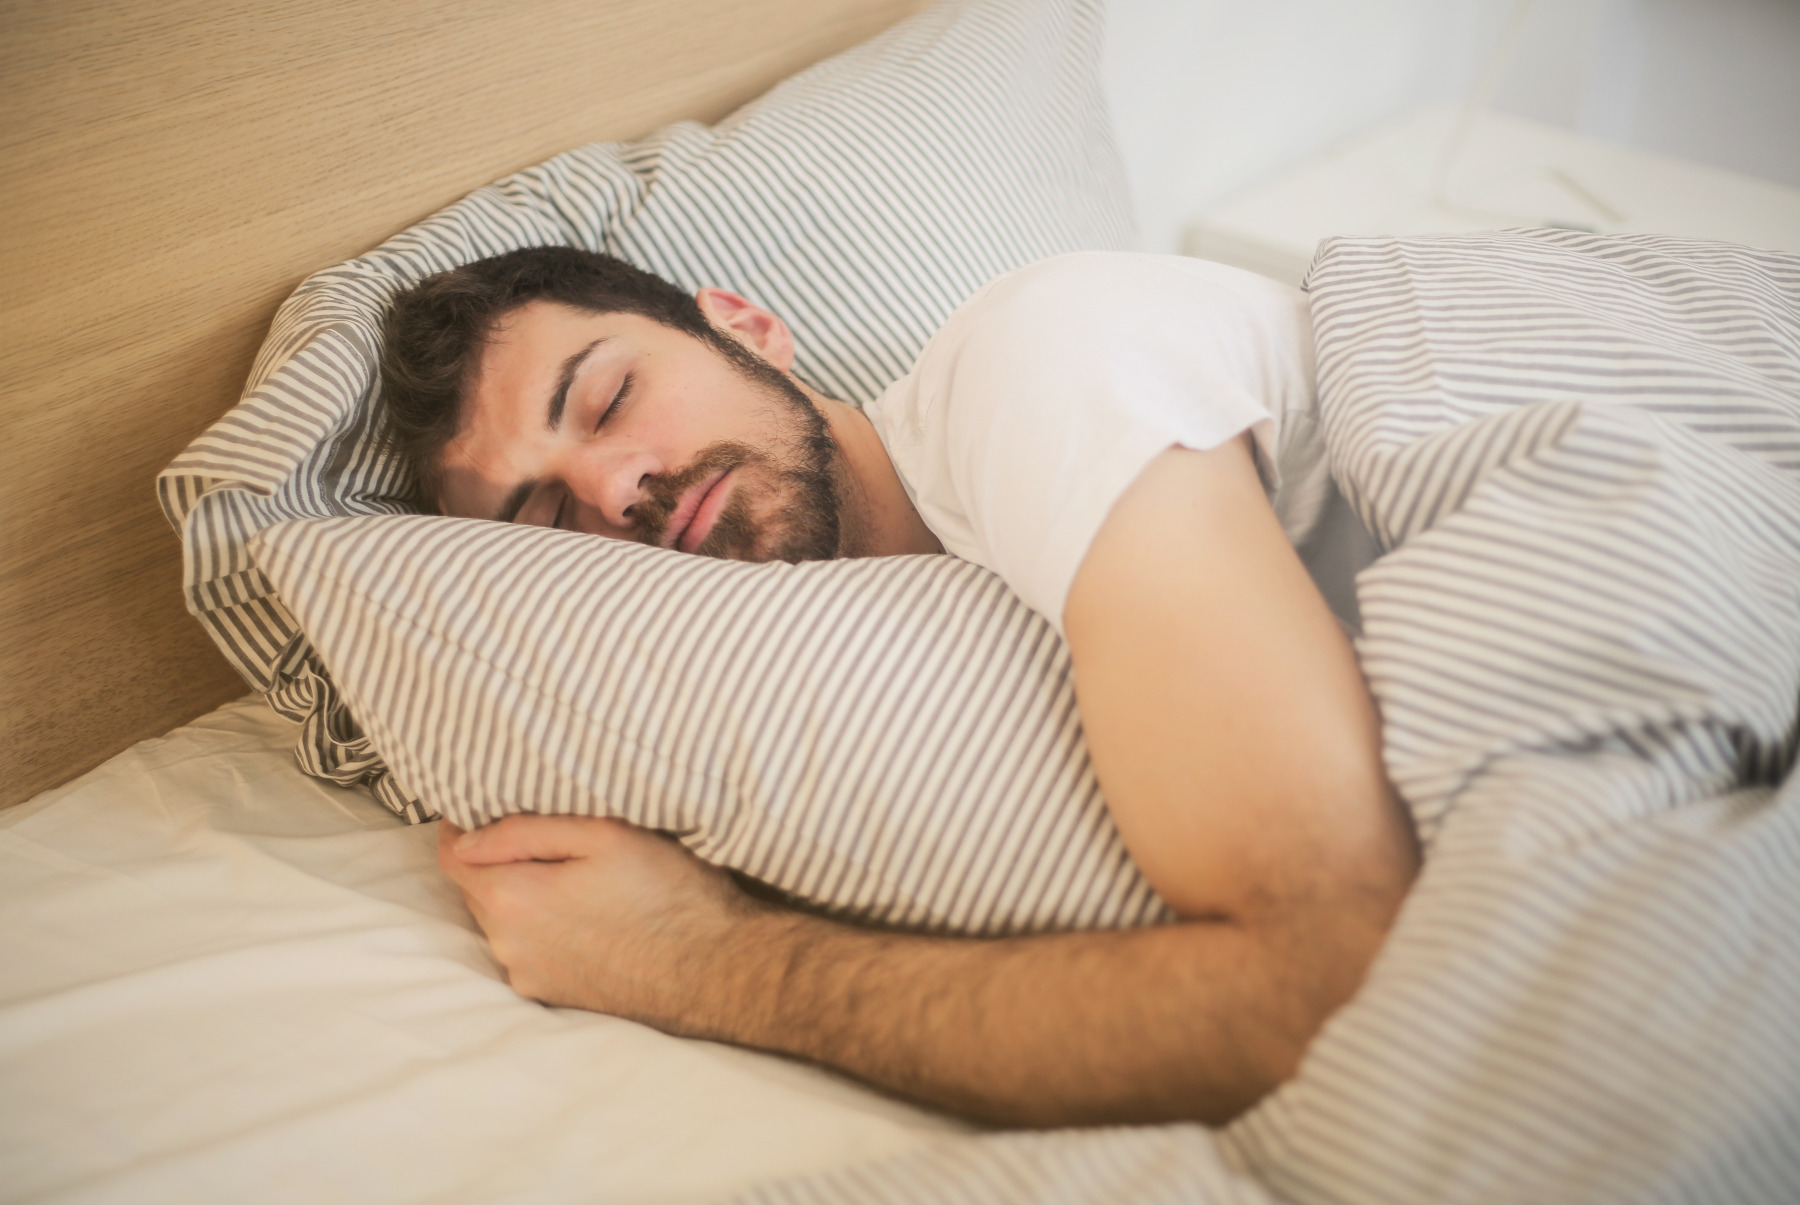 Can Mental Health Affect My Sleep?